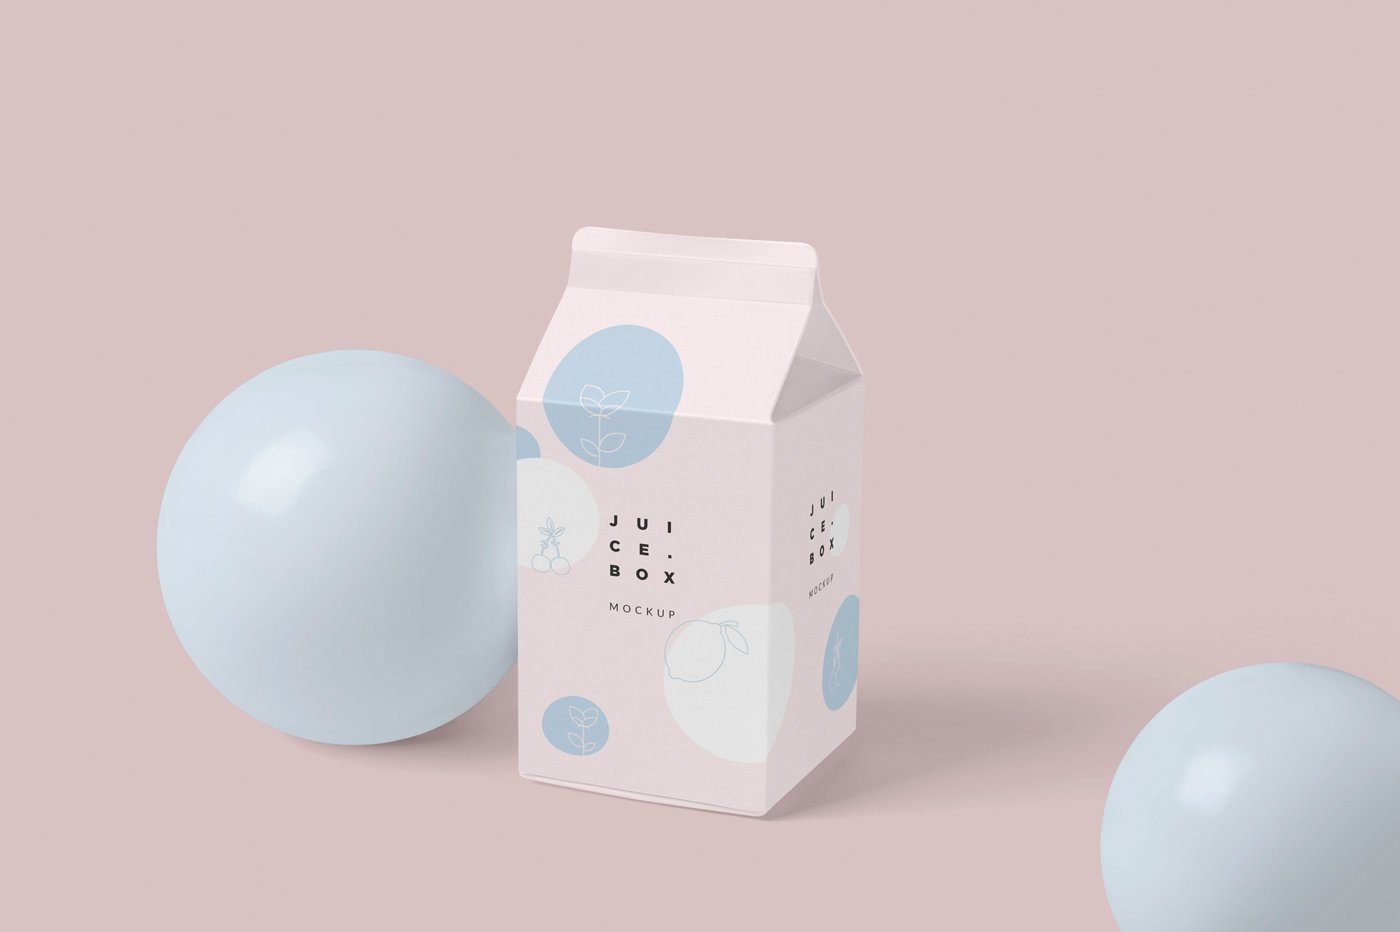 Juice/Milk Packaging Box Mockups cover image.